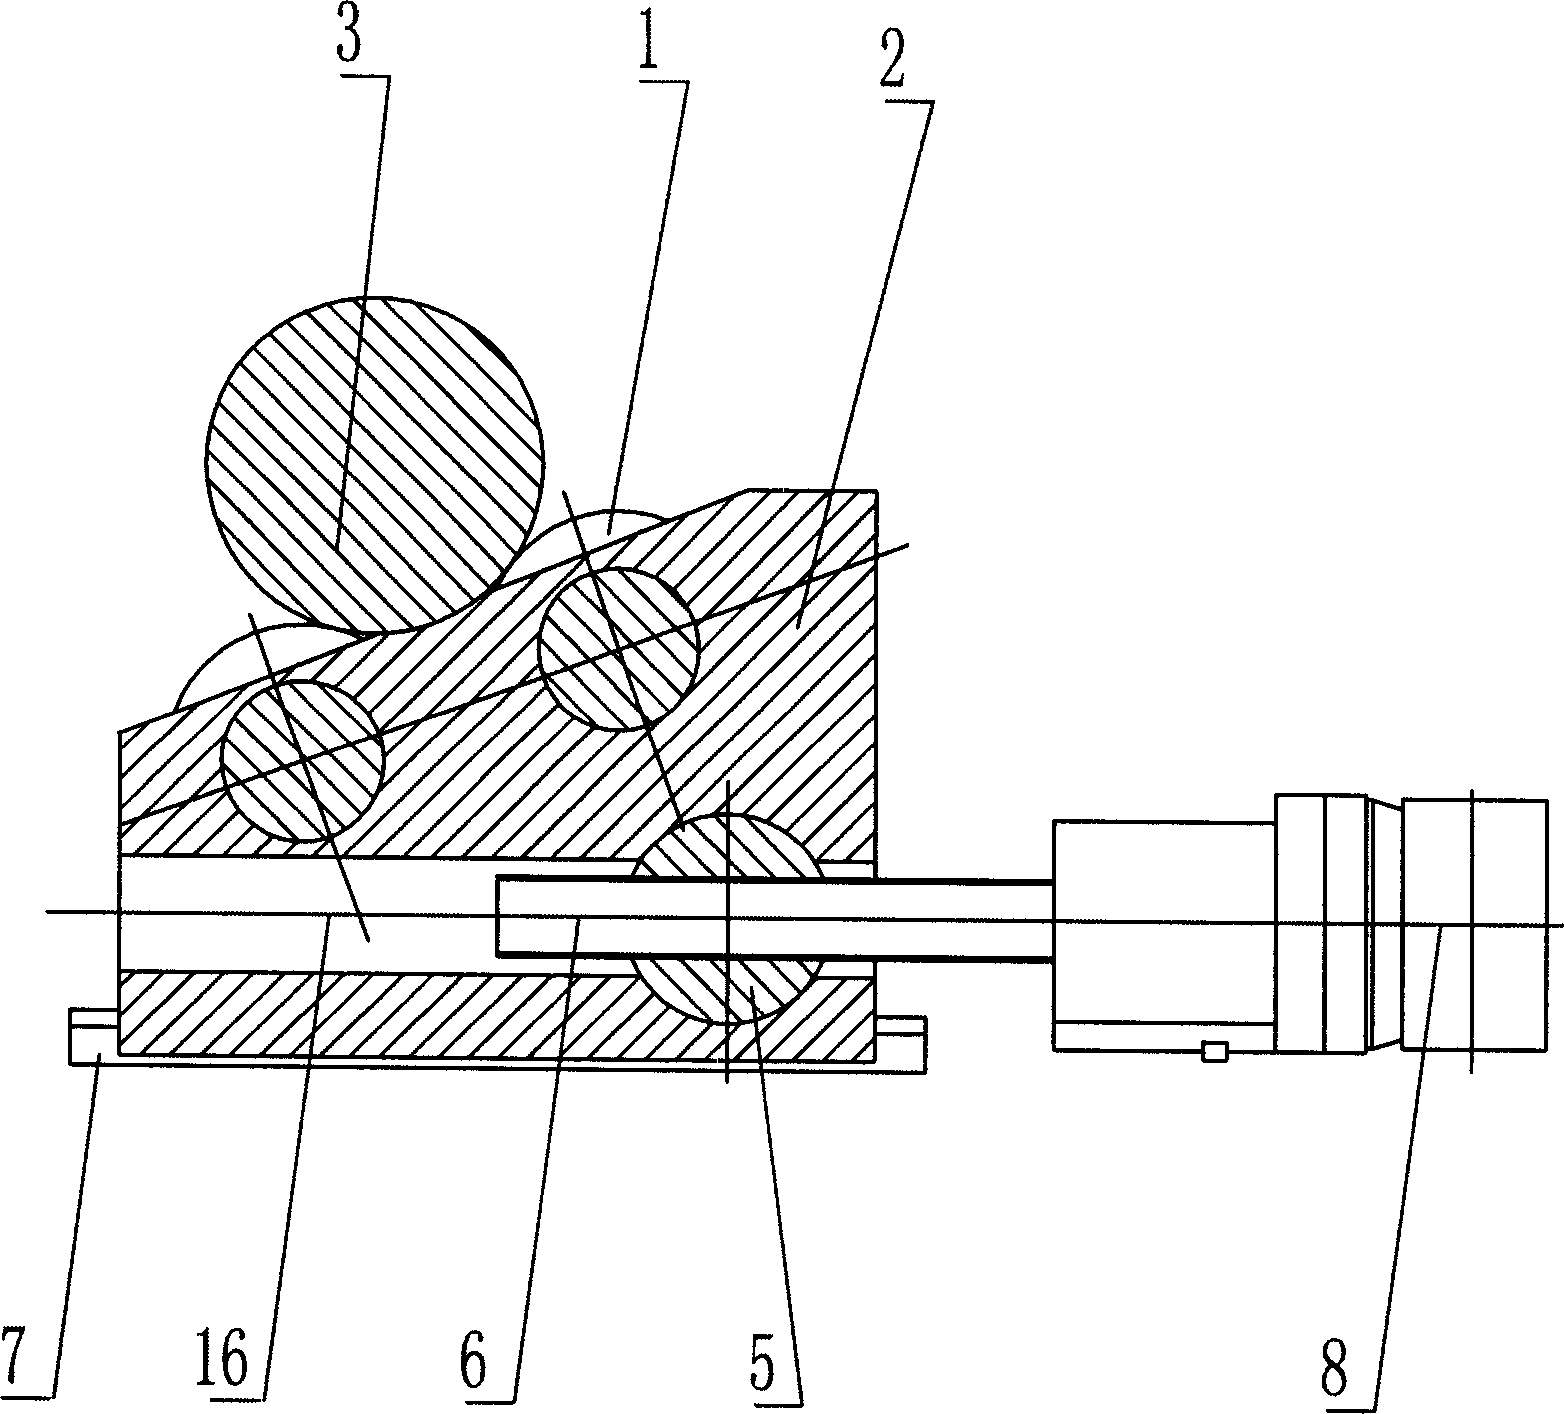 Horizontal downwards regulating three-roller plate bending machine